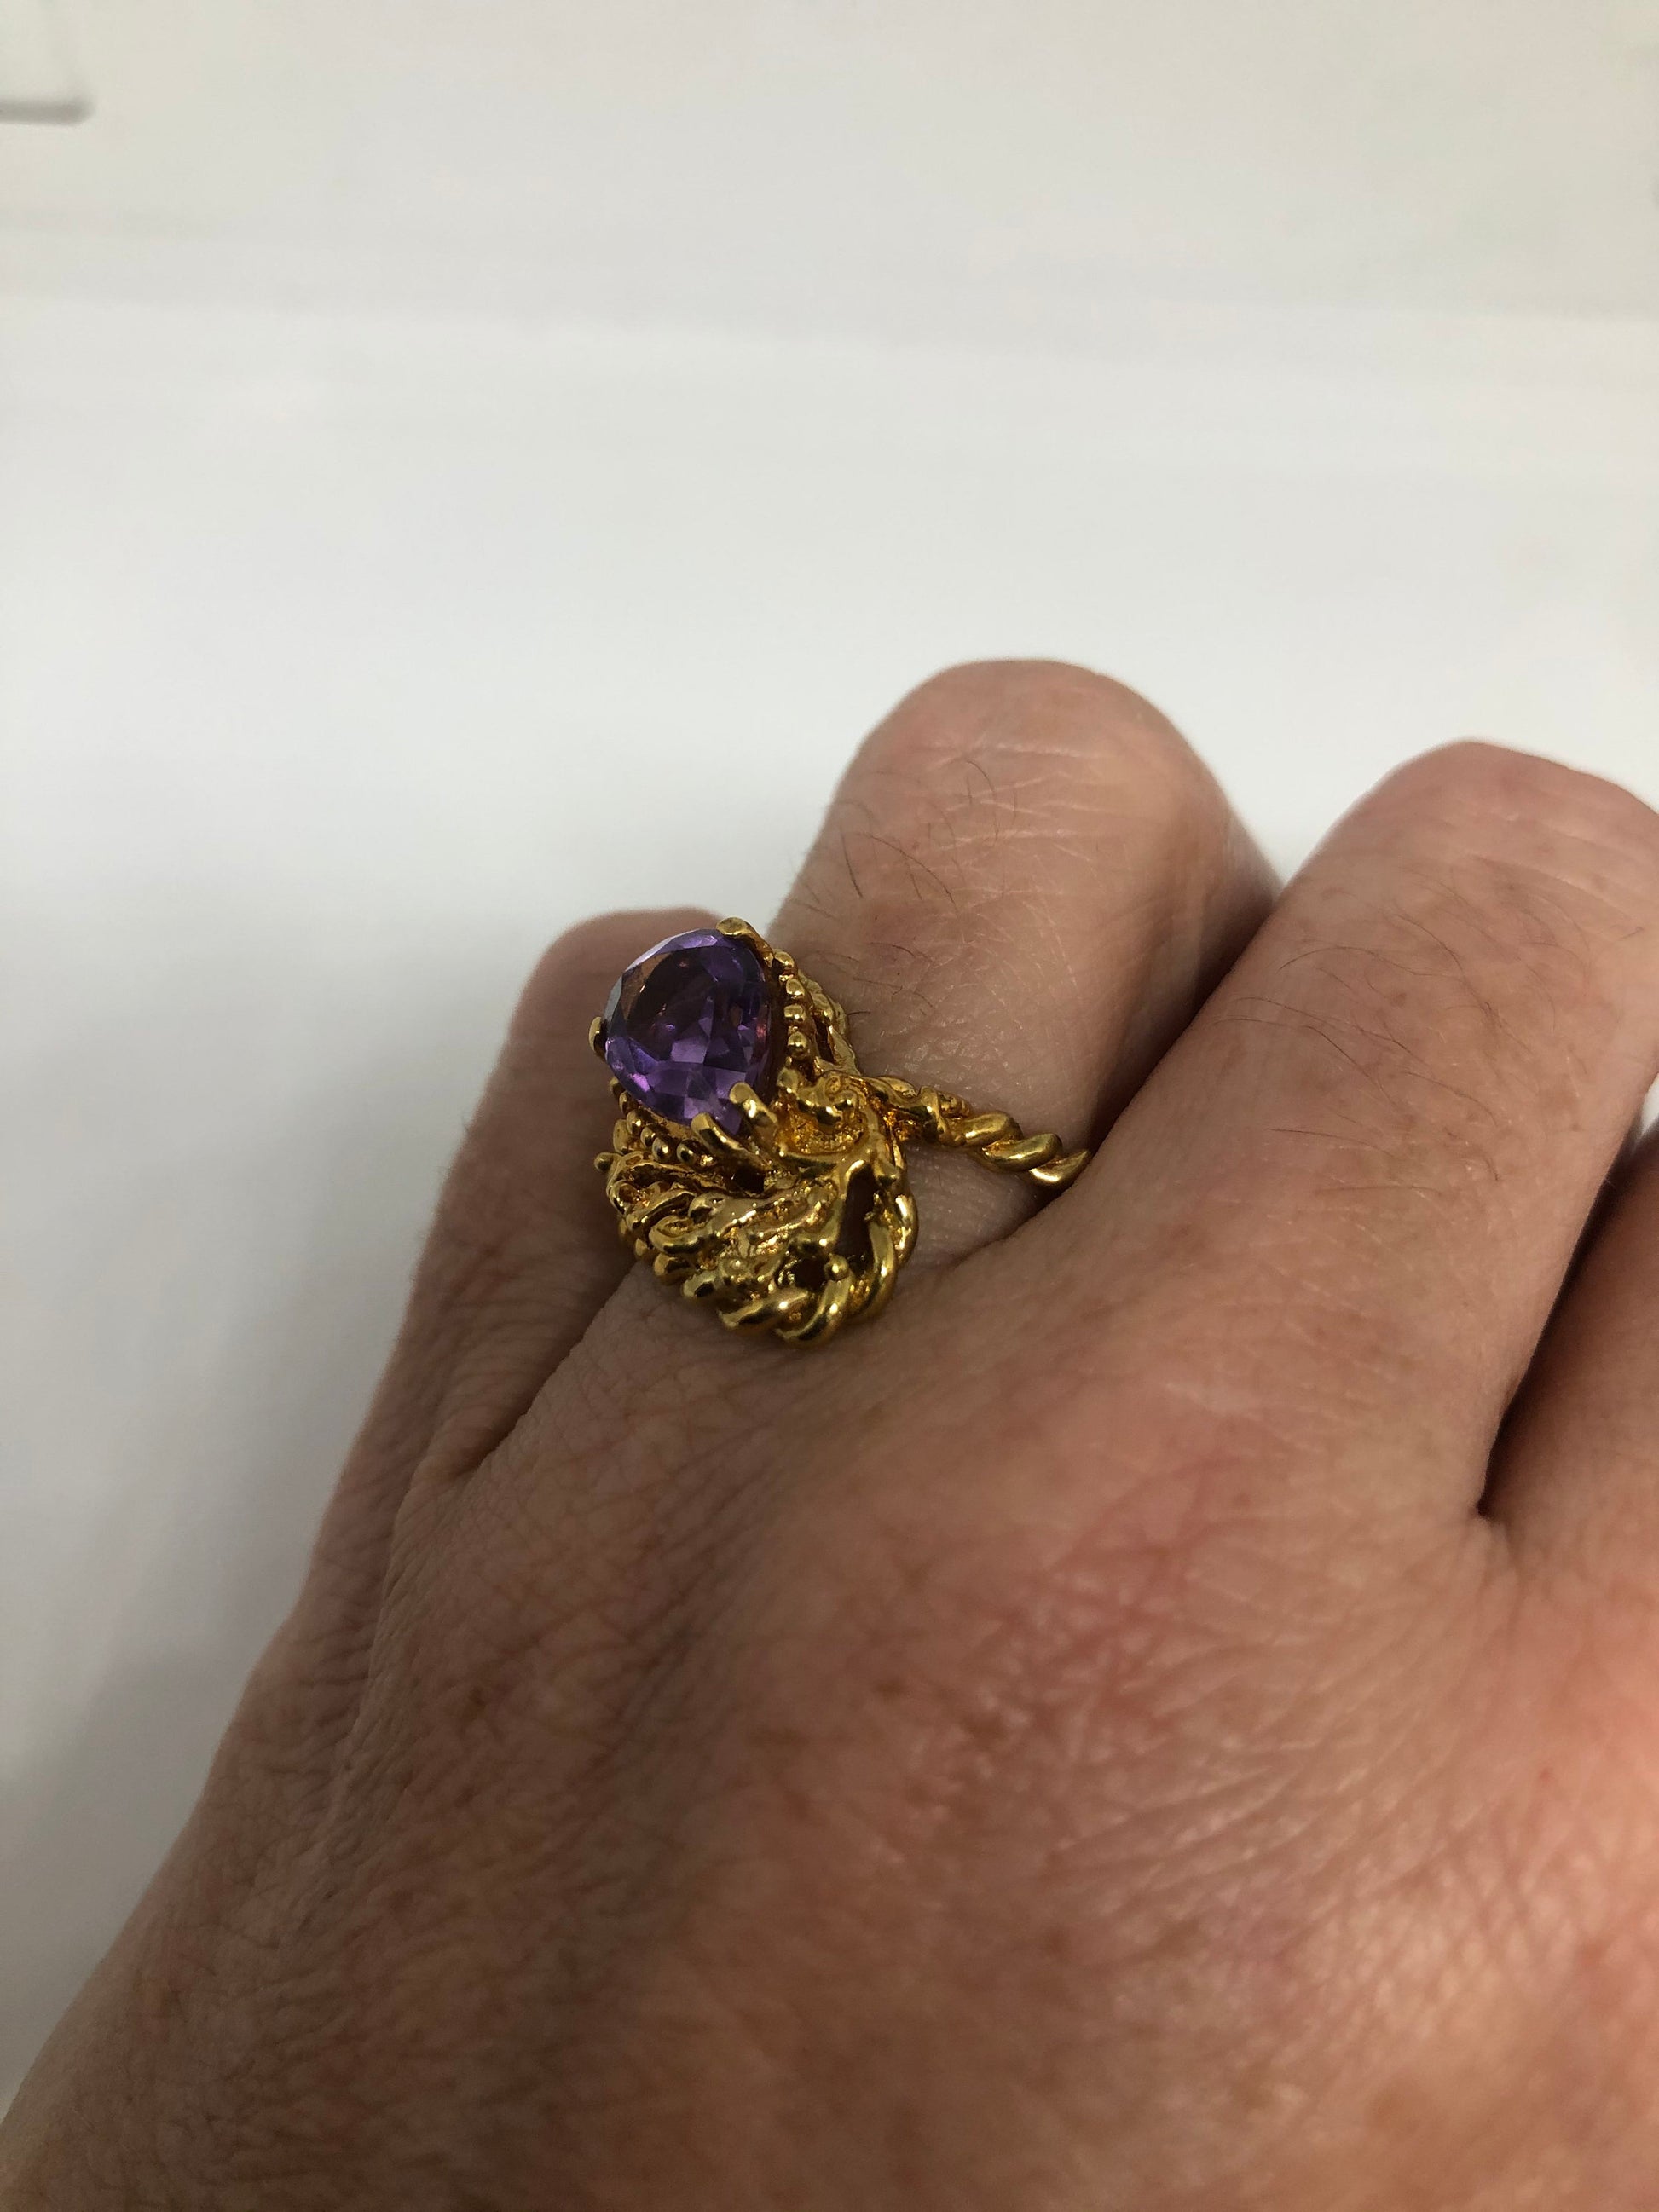 Vintage Purple Amethyst Ring 925 Sterling Silver Size 7